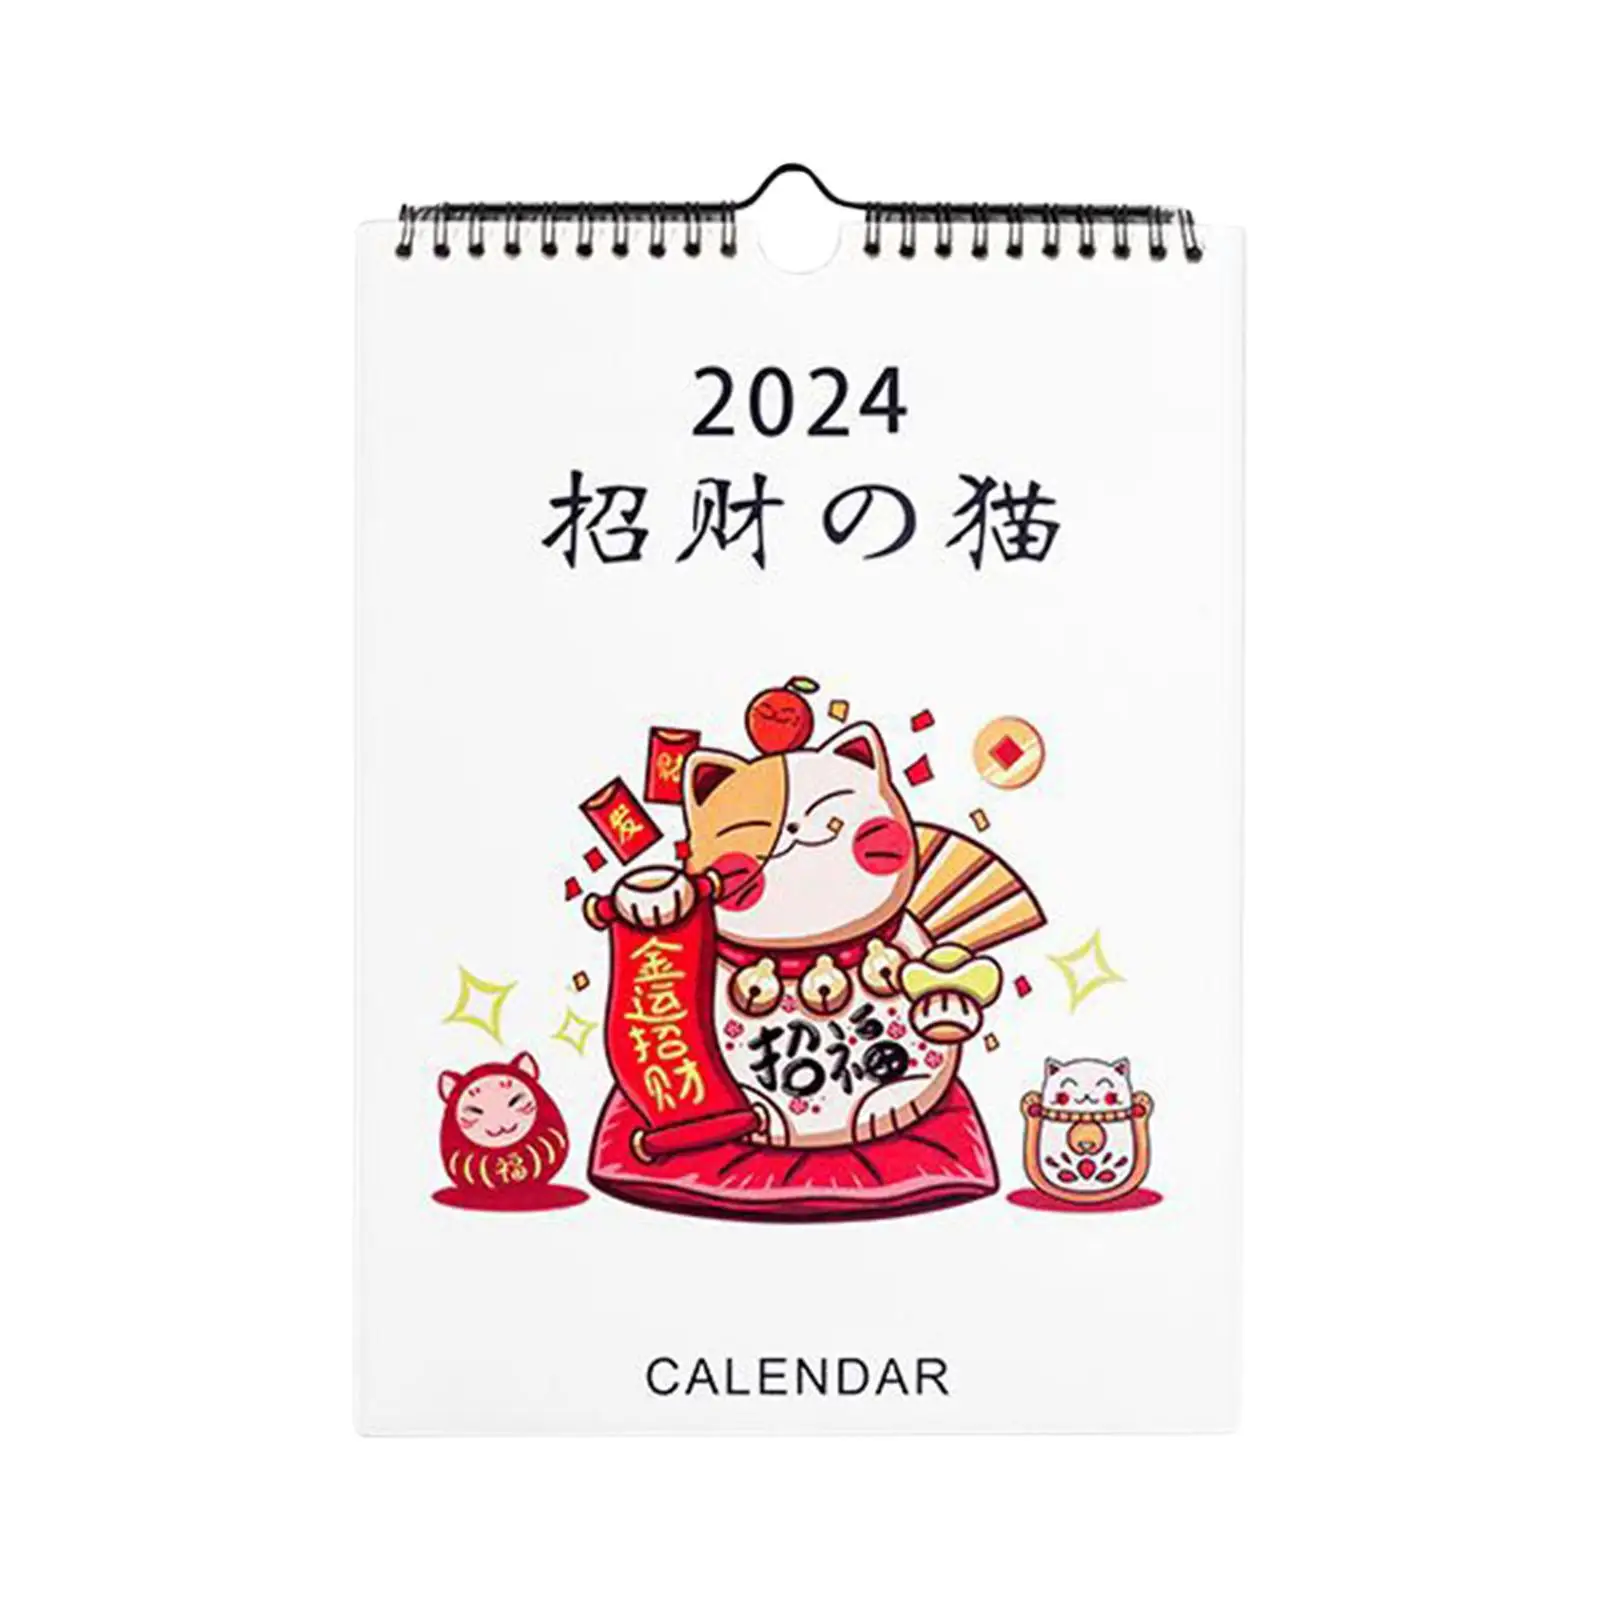 Coil Wall Calendar 2024,Wall Calendar Sept 2023 - DEC 2024 with Hook 16 Month Calendar for School,Home Bedroom Holiday Office